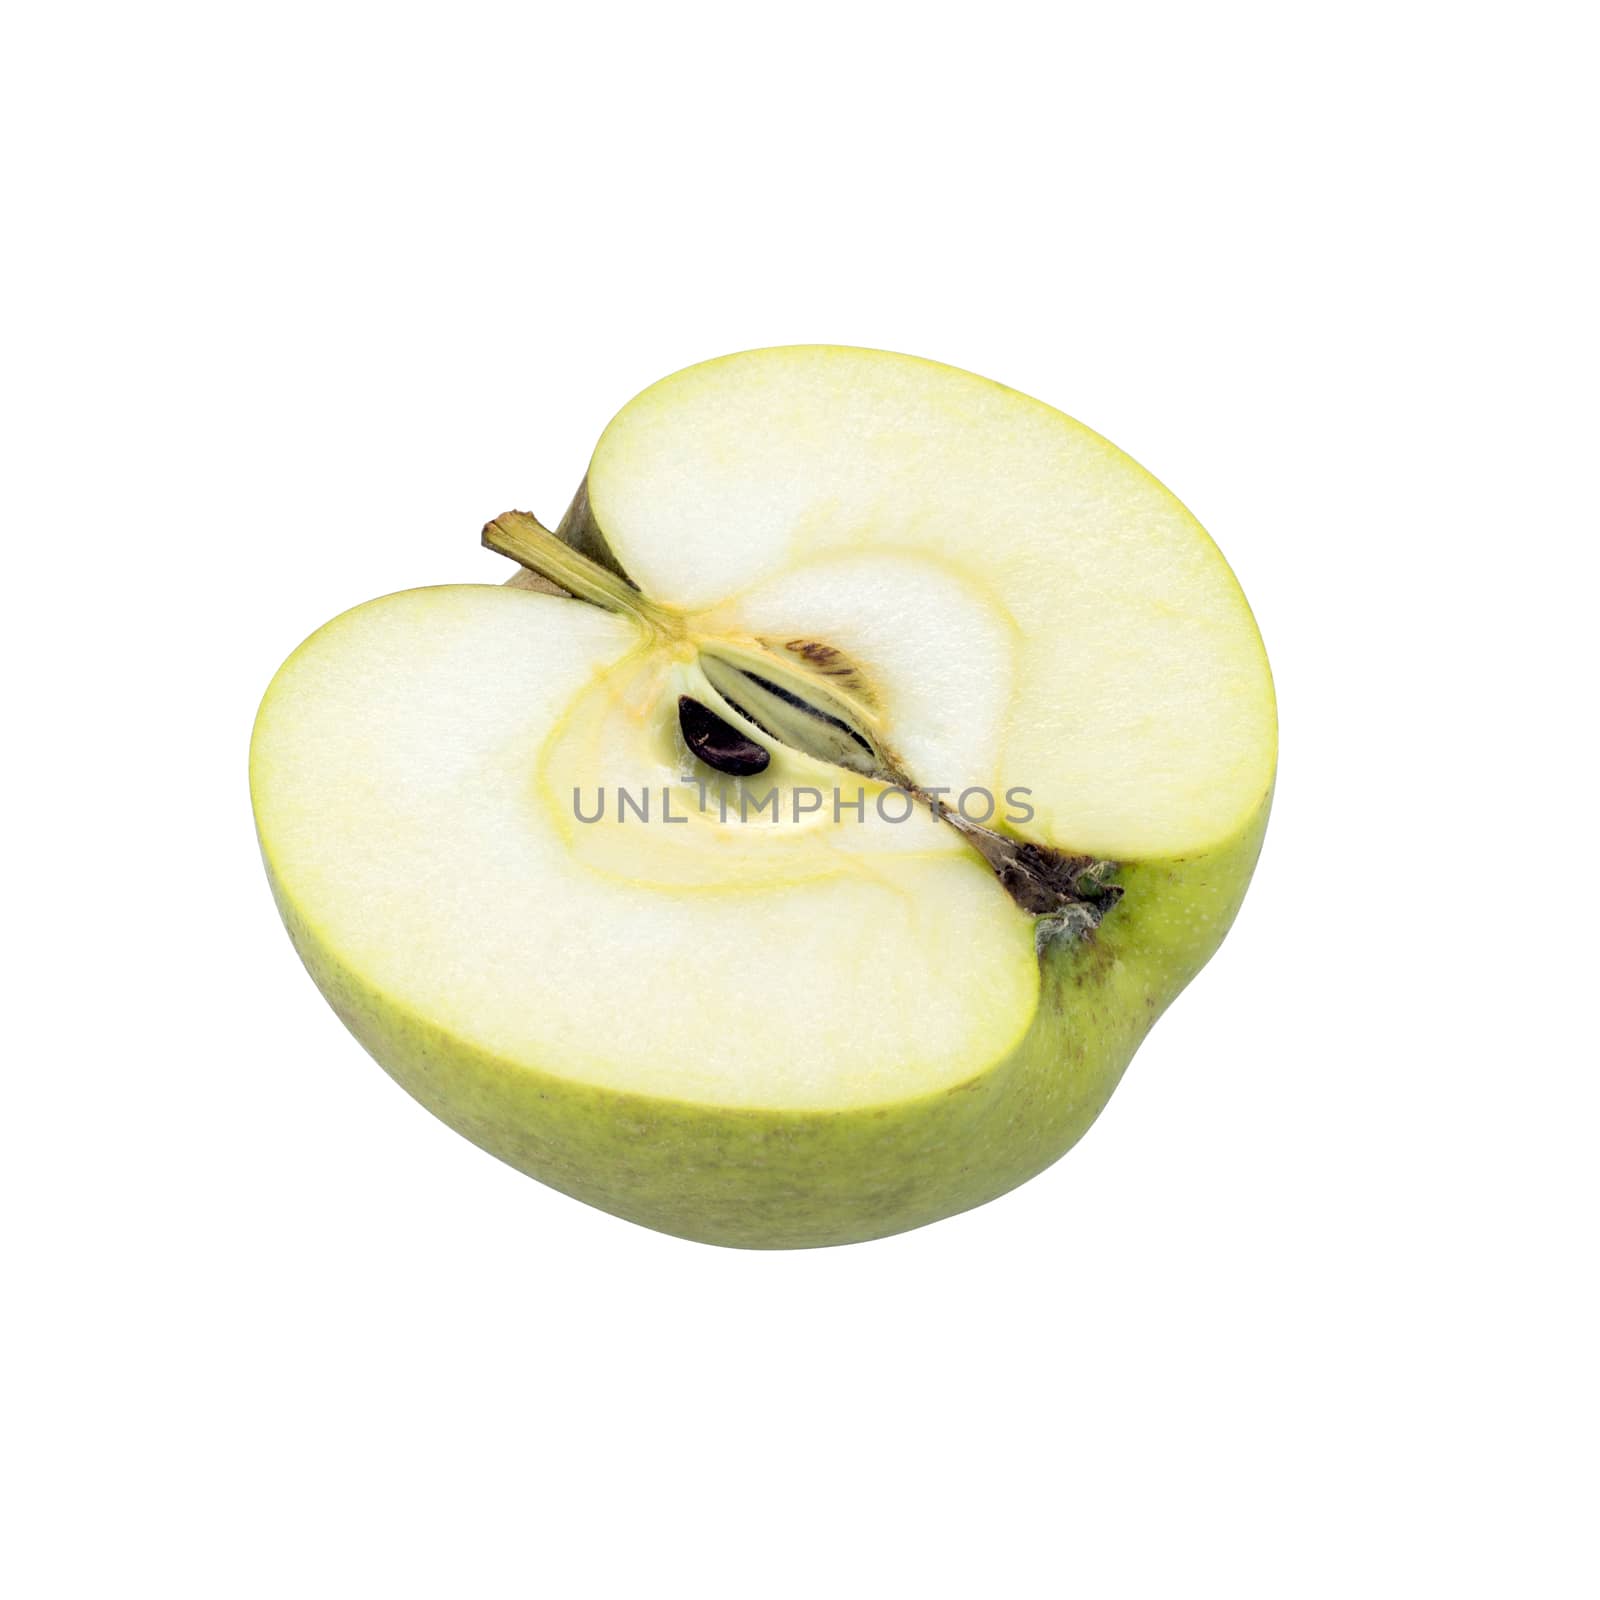 Yellow Renetta Apple half on white background by matteocurcio